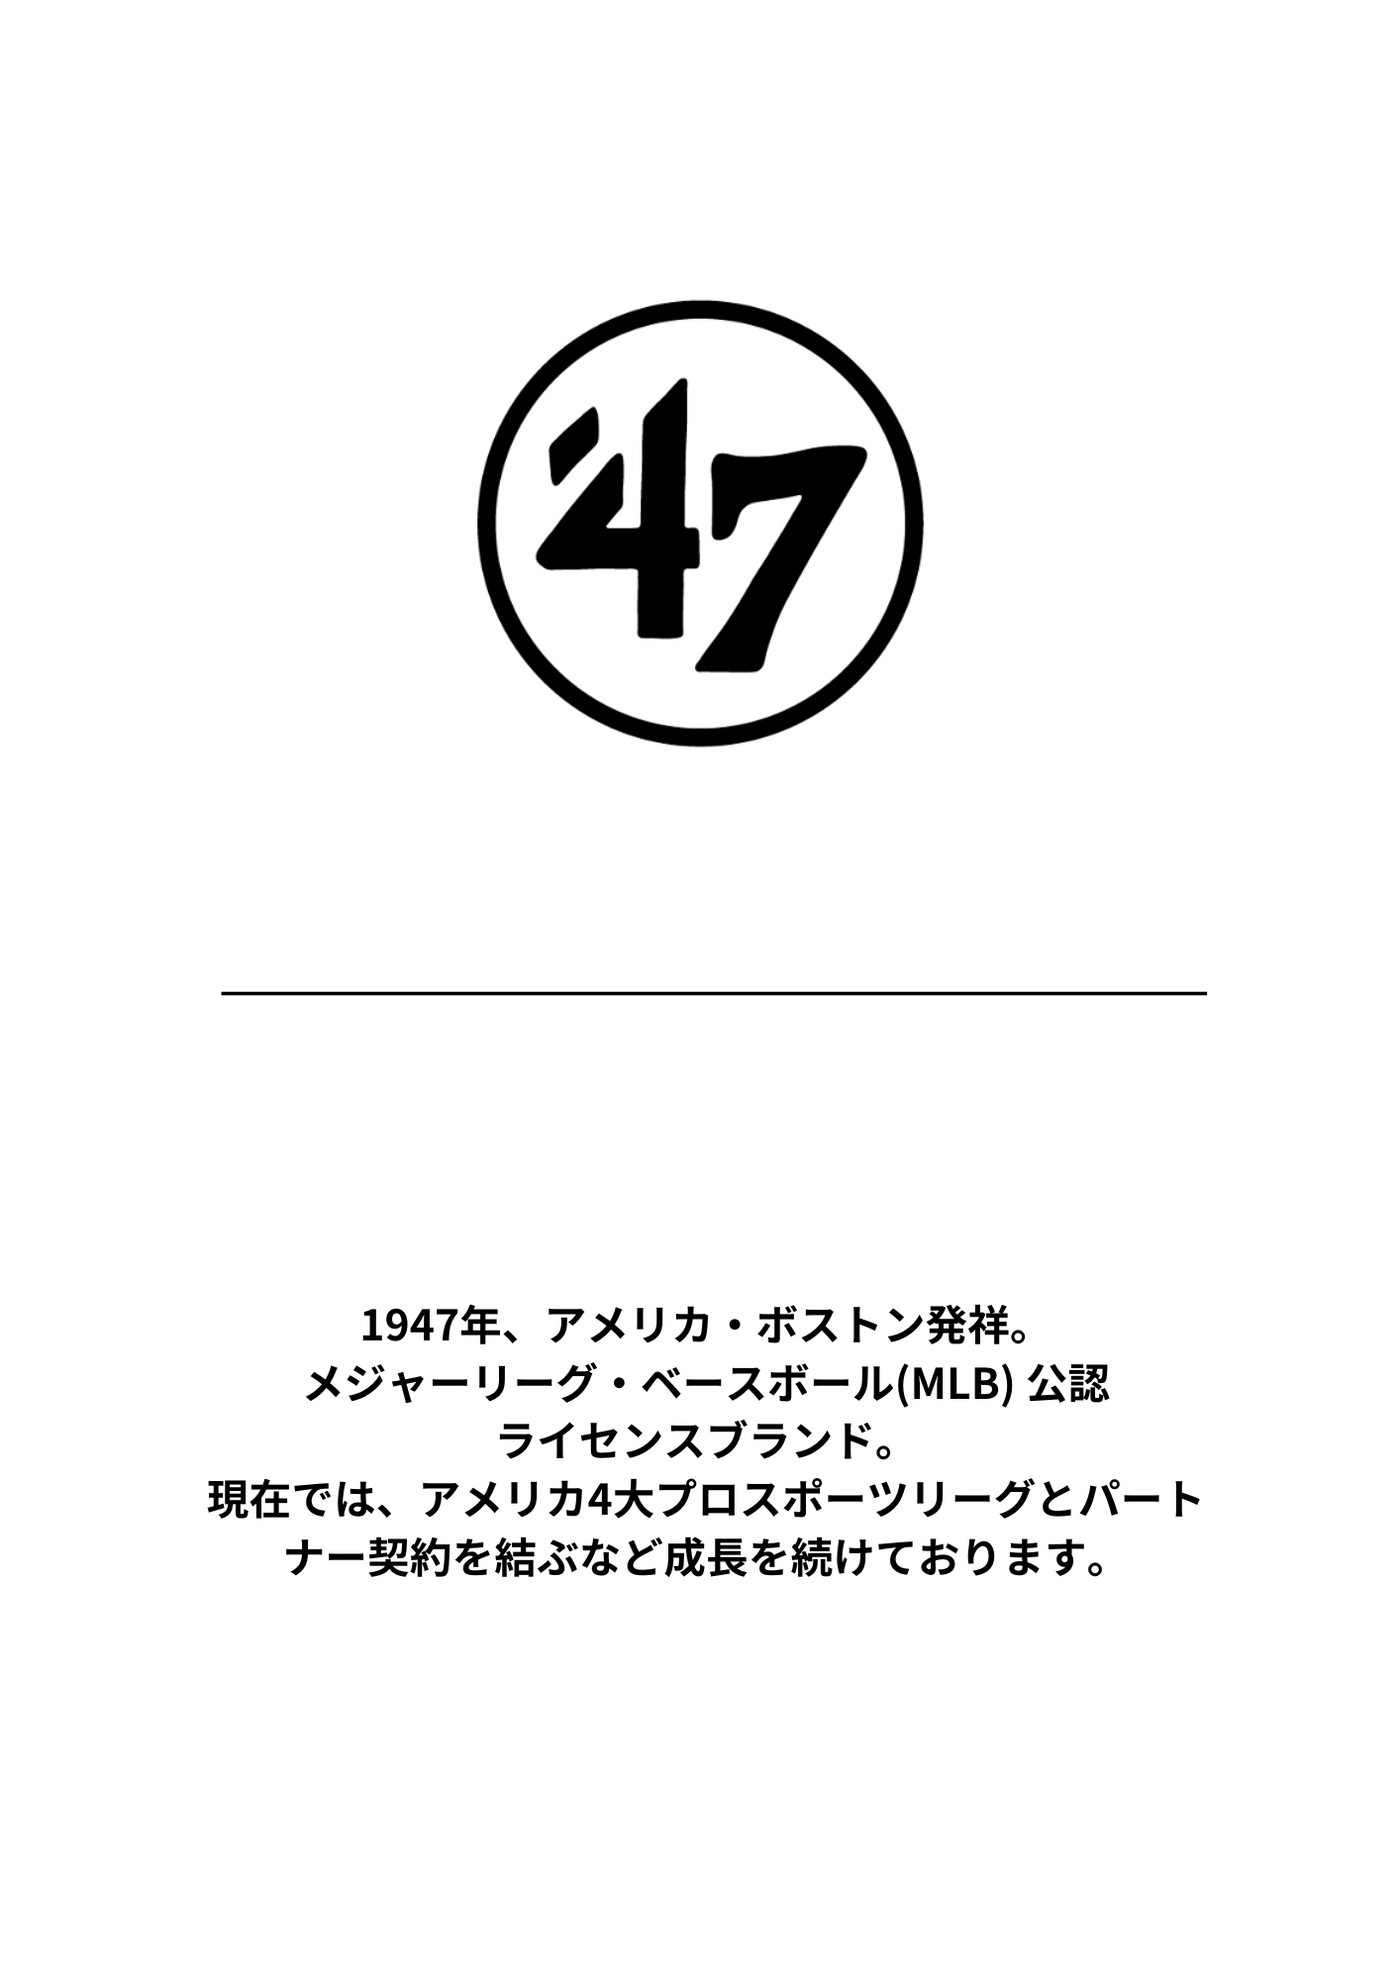 CHUKYO '47 CLEAN UP ミニCロゴ ネイビー